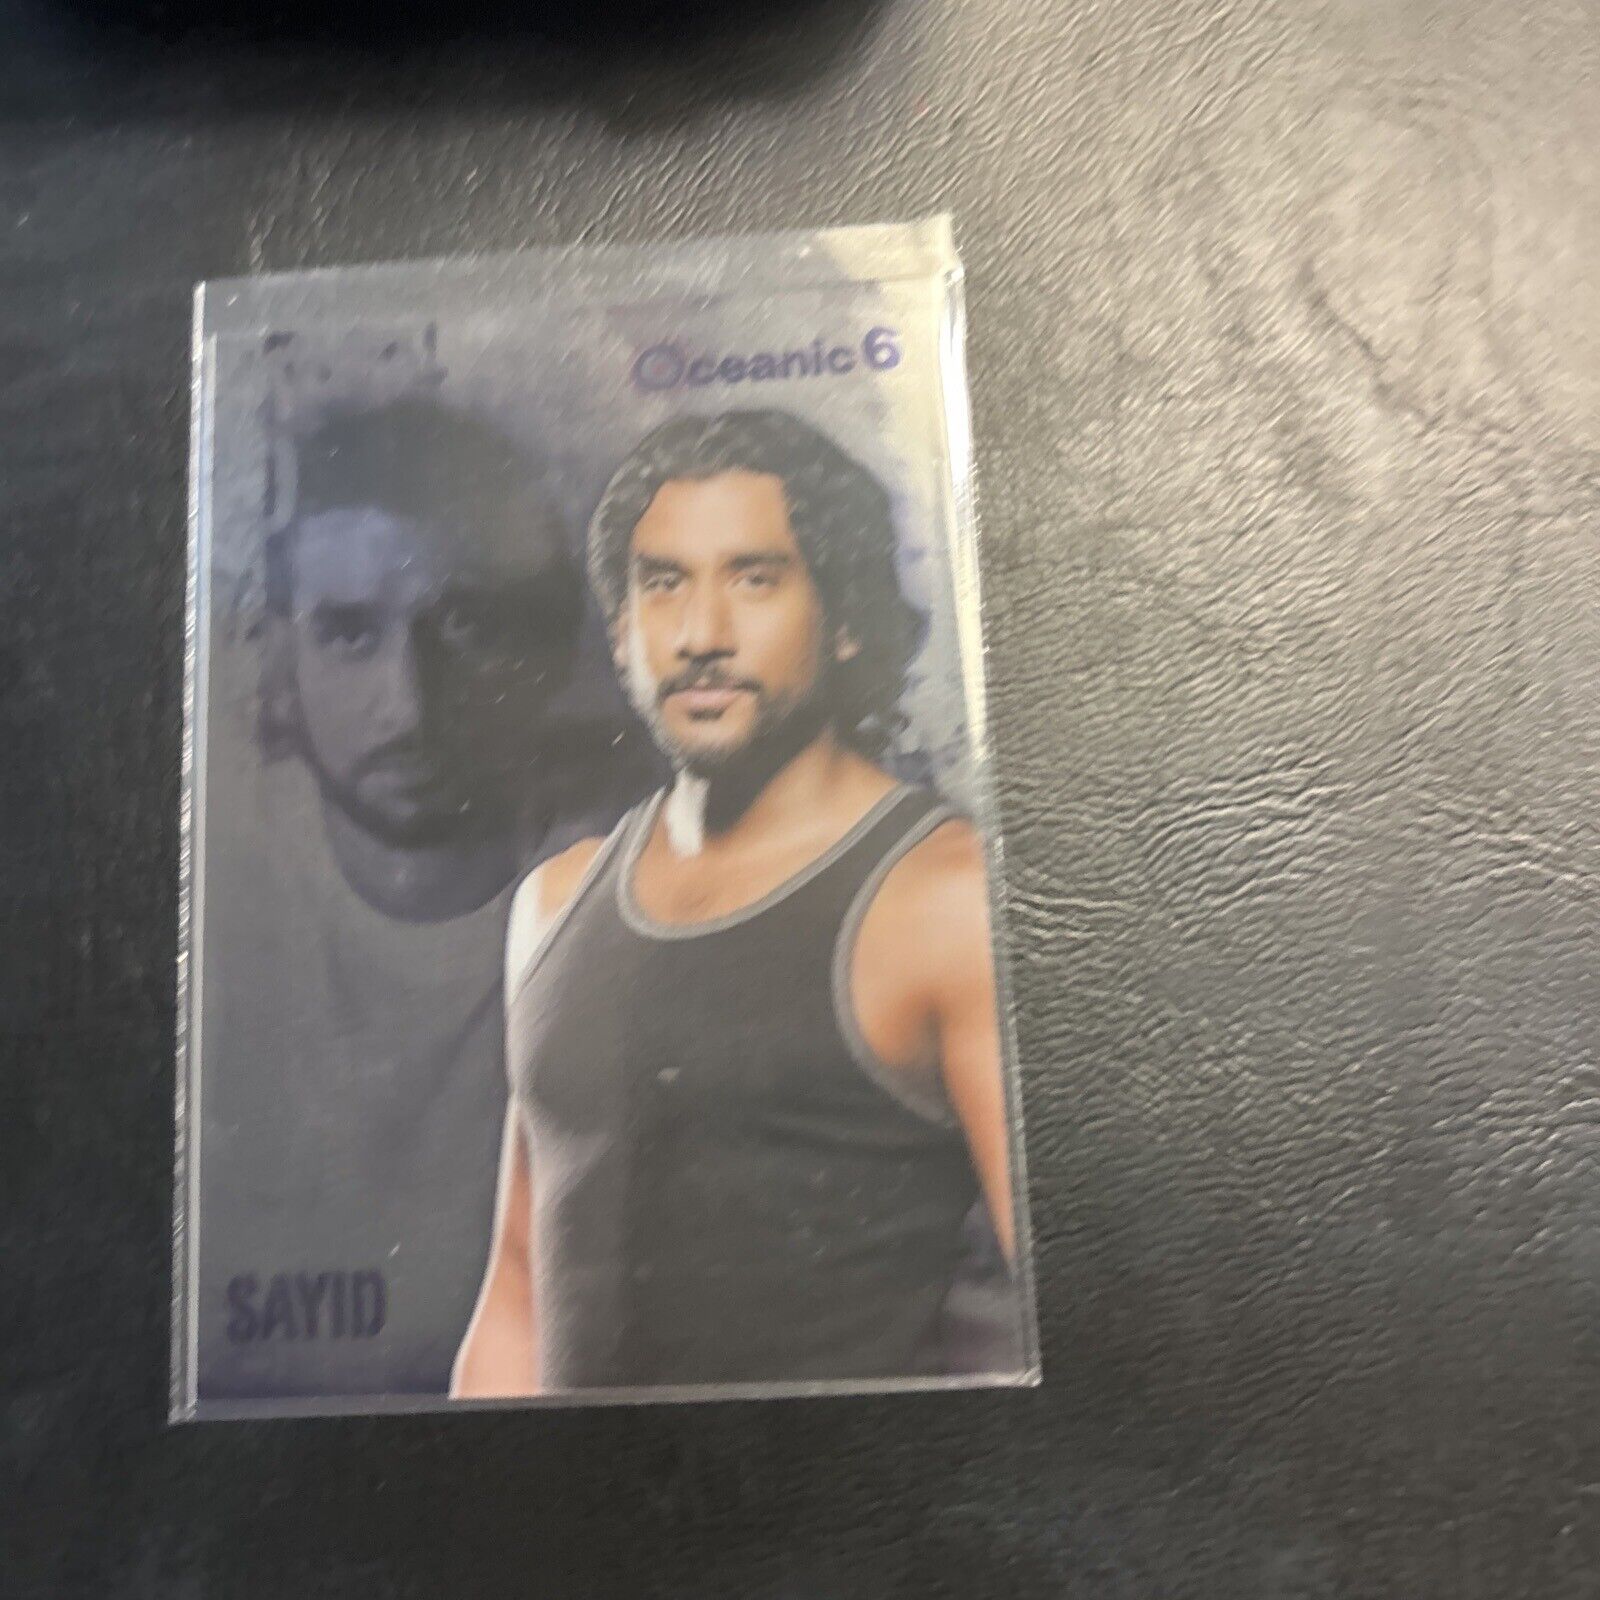 Jb8d Lost Oceanic 6￼ S4 Naveen Andrews As Sayid Jarrah￼